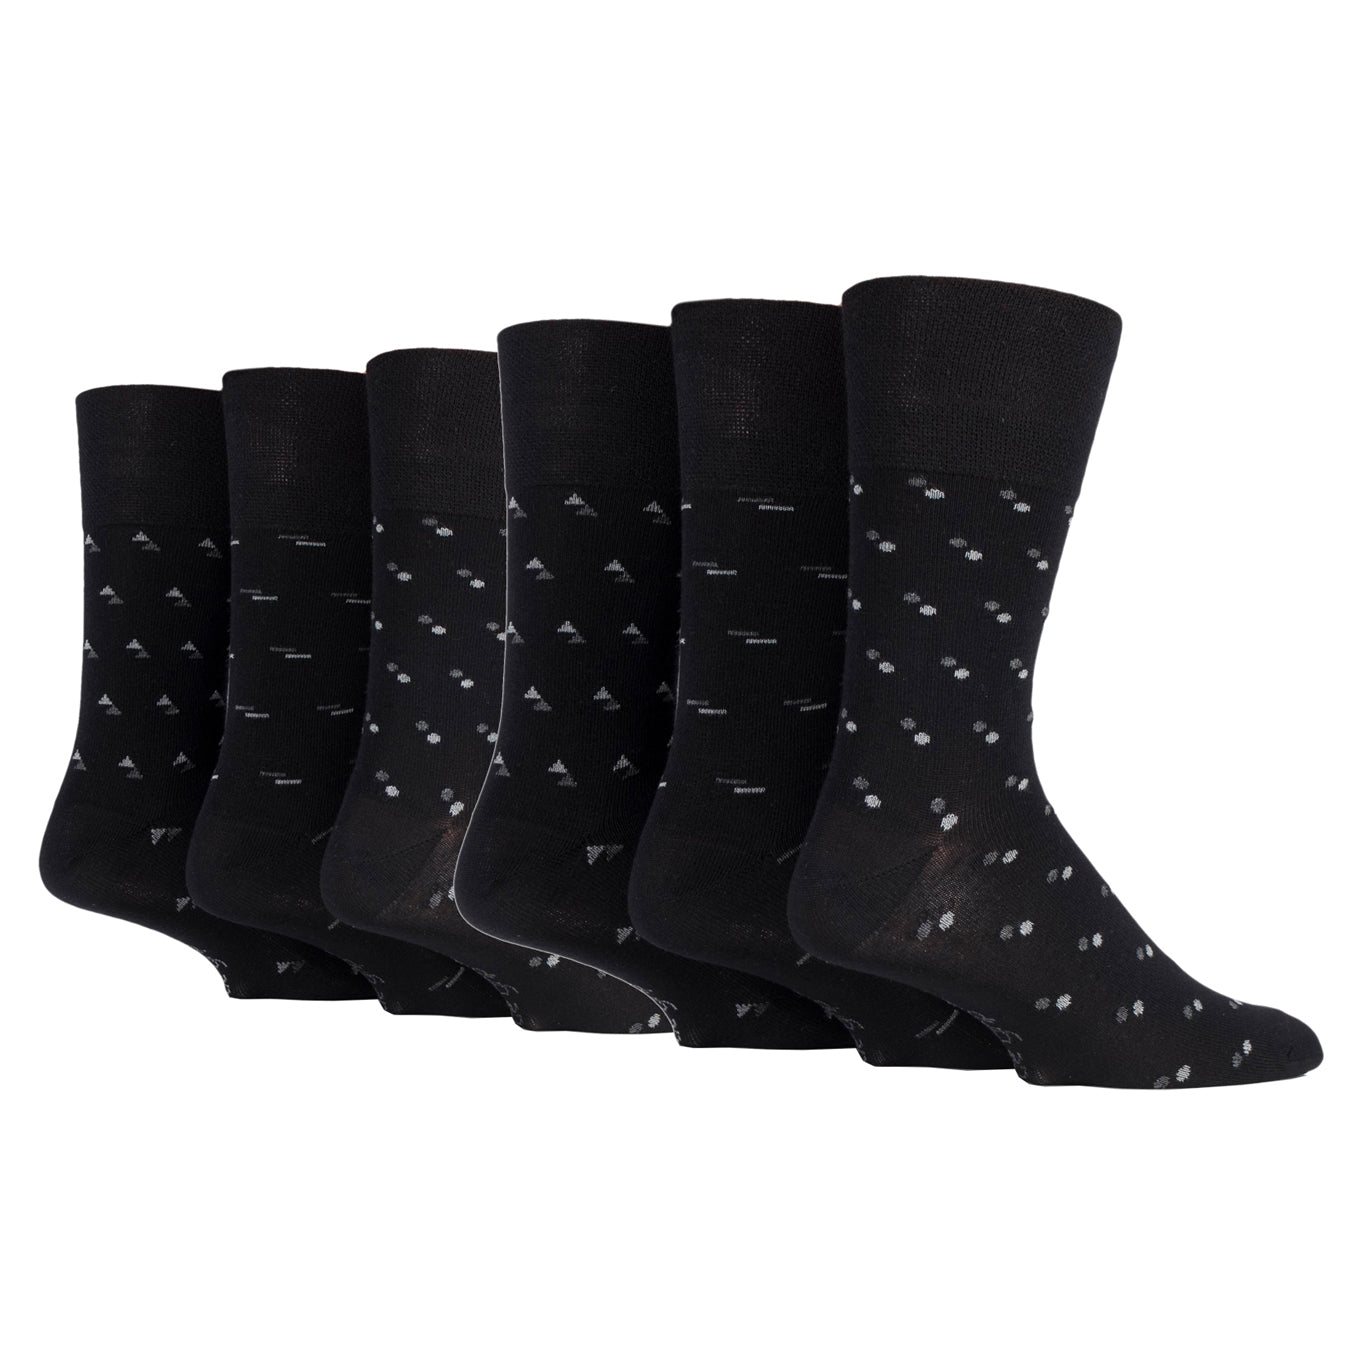 6 Pairs Men's Gentle Grip Bamboo Socks - Suit Black